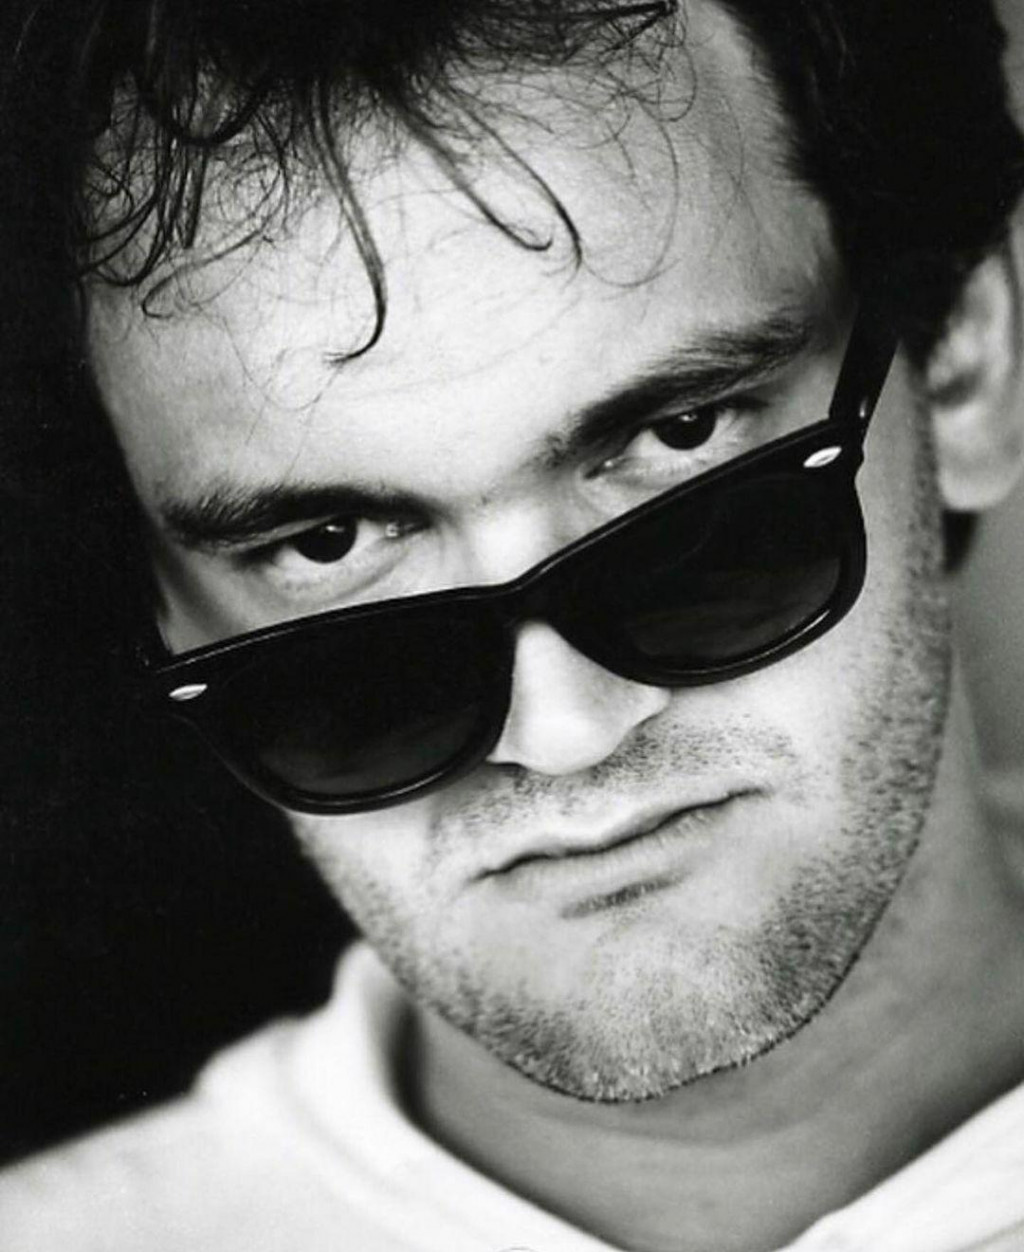 &lt;p&gt;Quentin Tarantino&lt;/p&gt;
